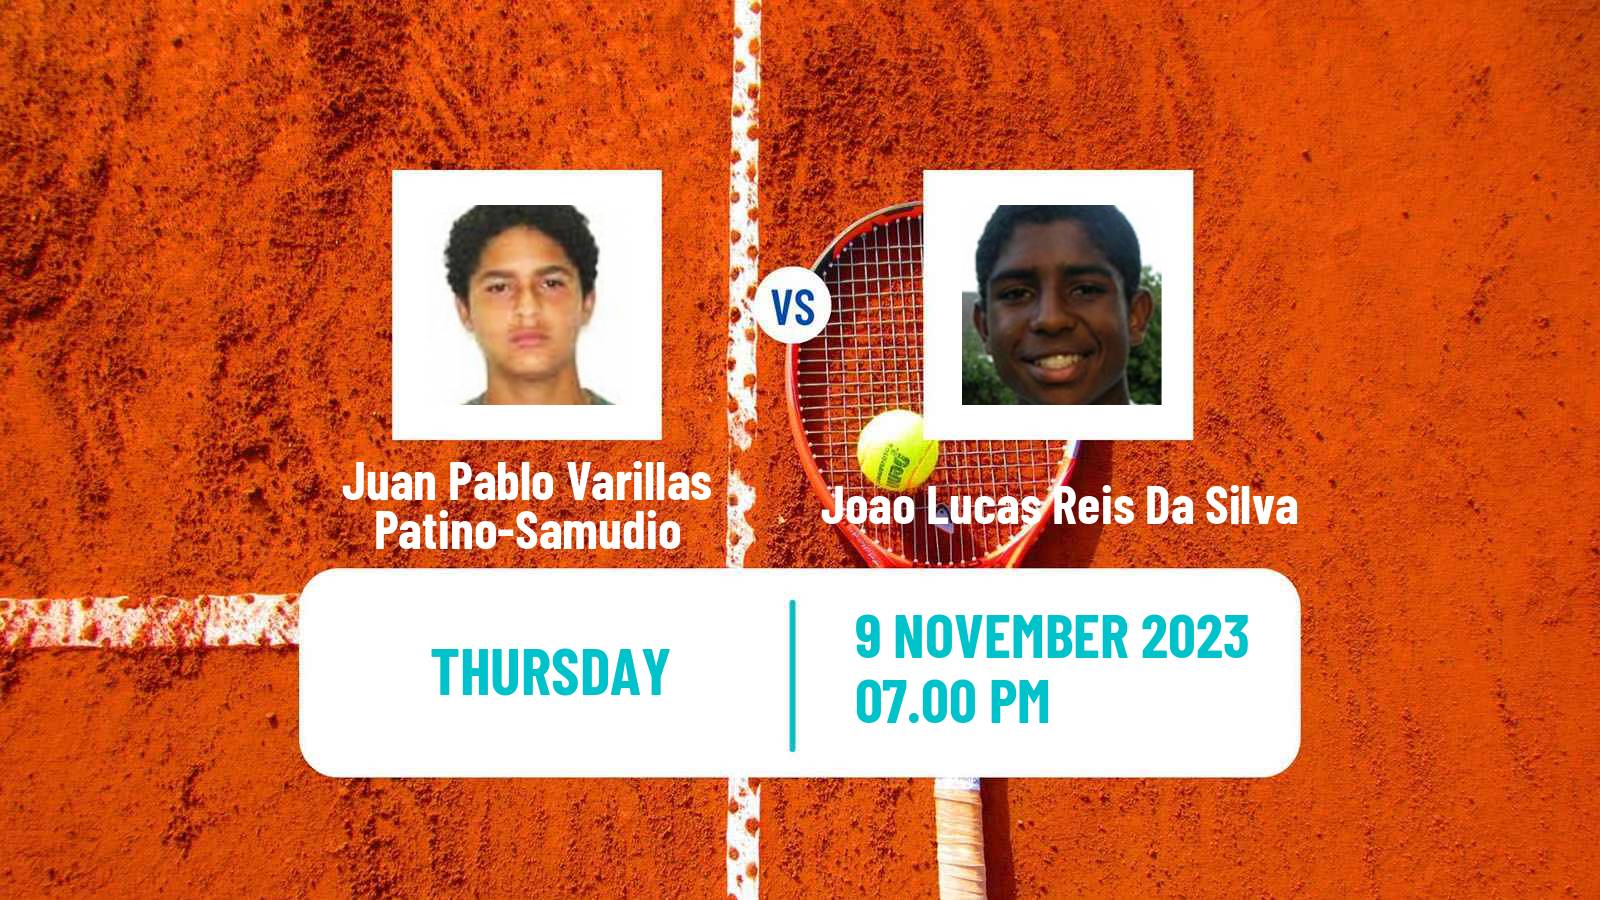 Tennis Lima 2 Challenger Men Juan Pablo Varillas Patino-Samudio - Joao Lucas Reis Da Silva